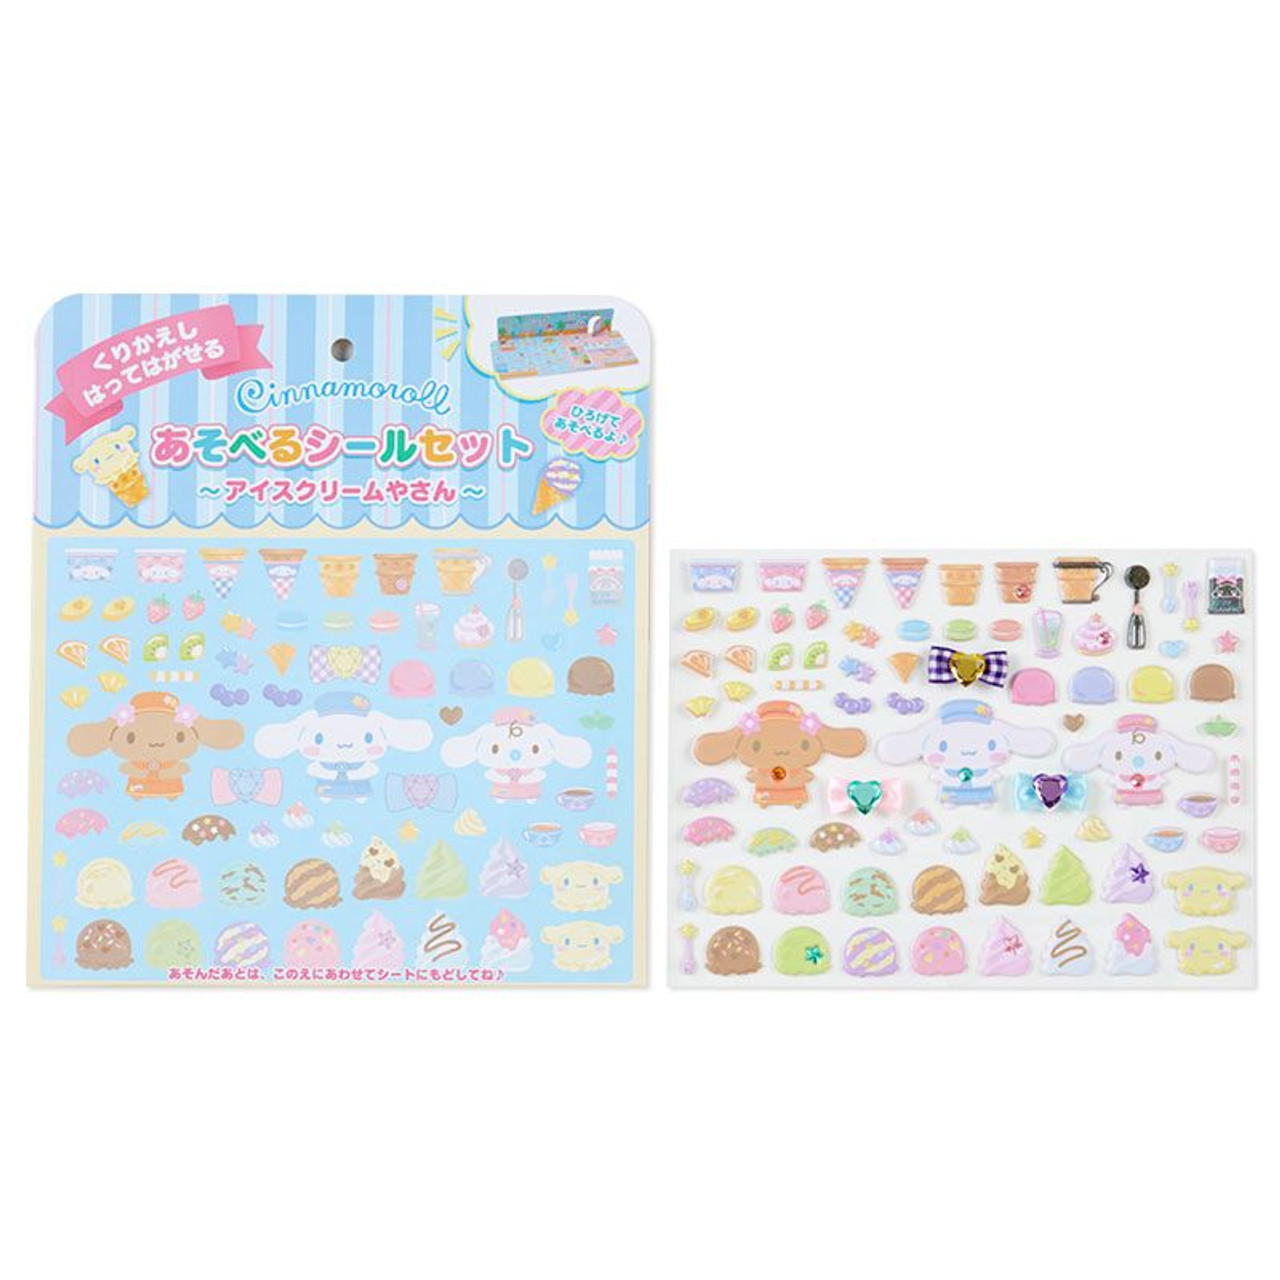 Sanrio Sticker Sheet - Cinnamoroll 4964694406967